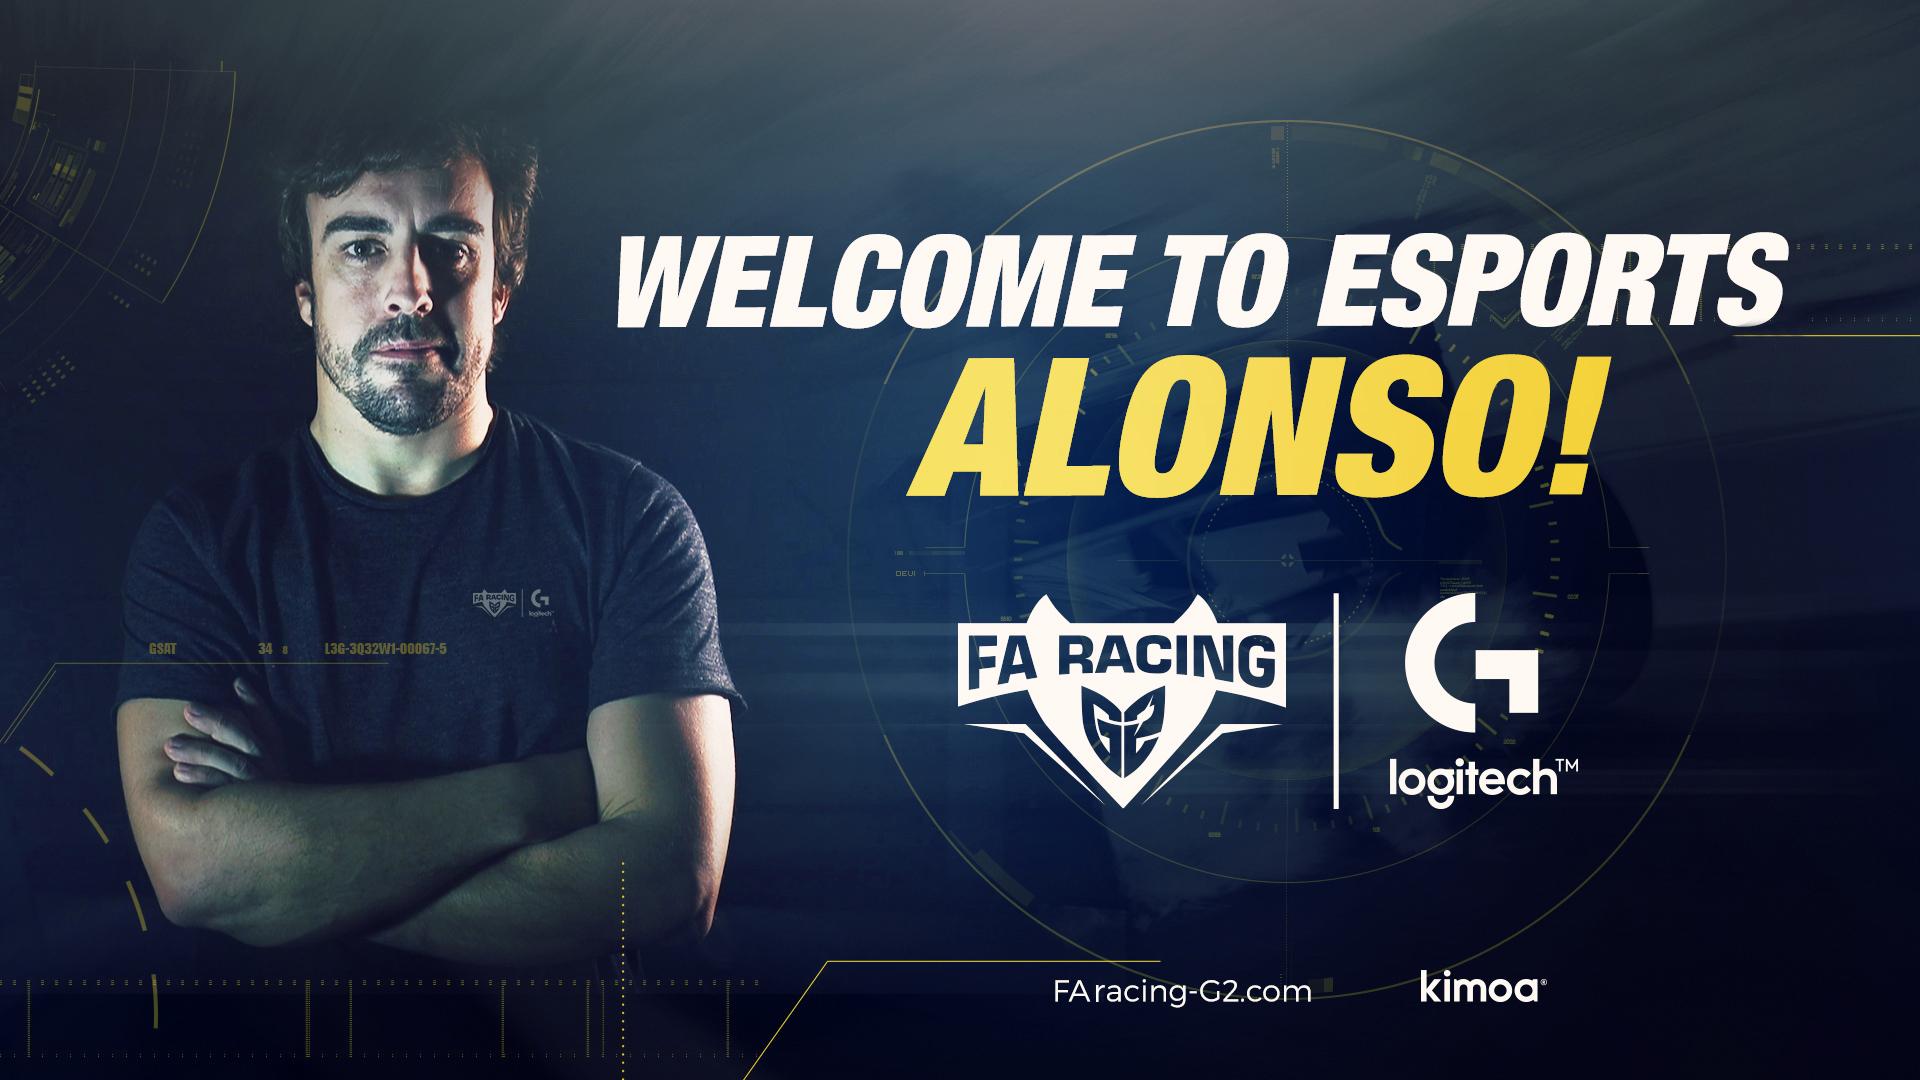 Fernando Alonso FA Racing G2 Logitech esports